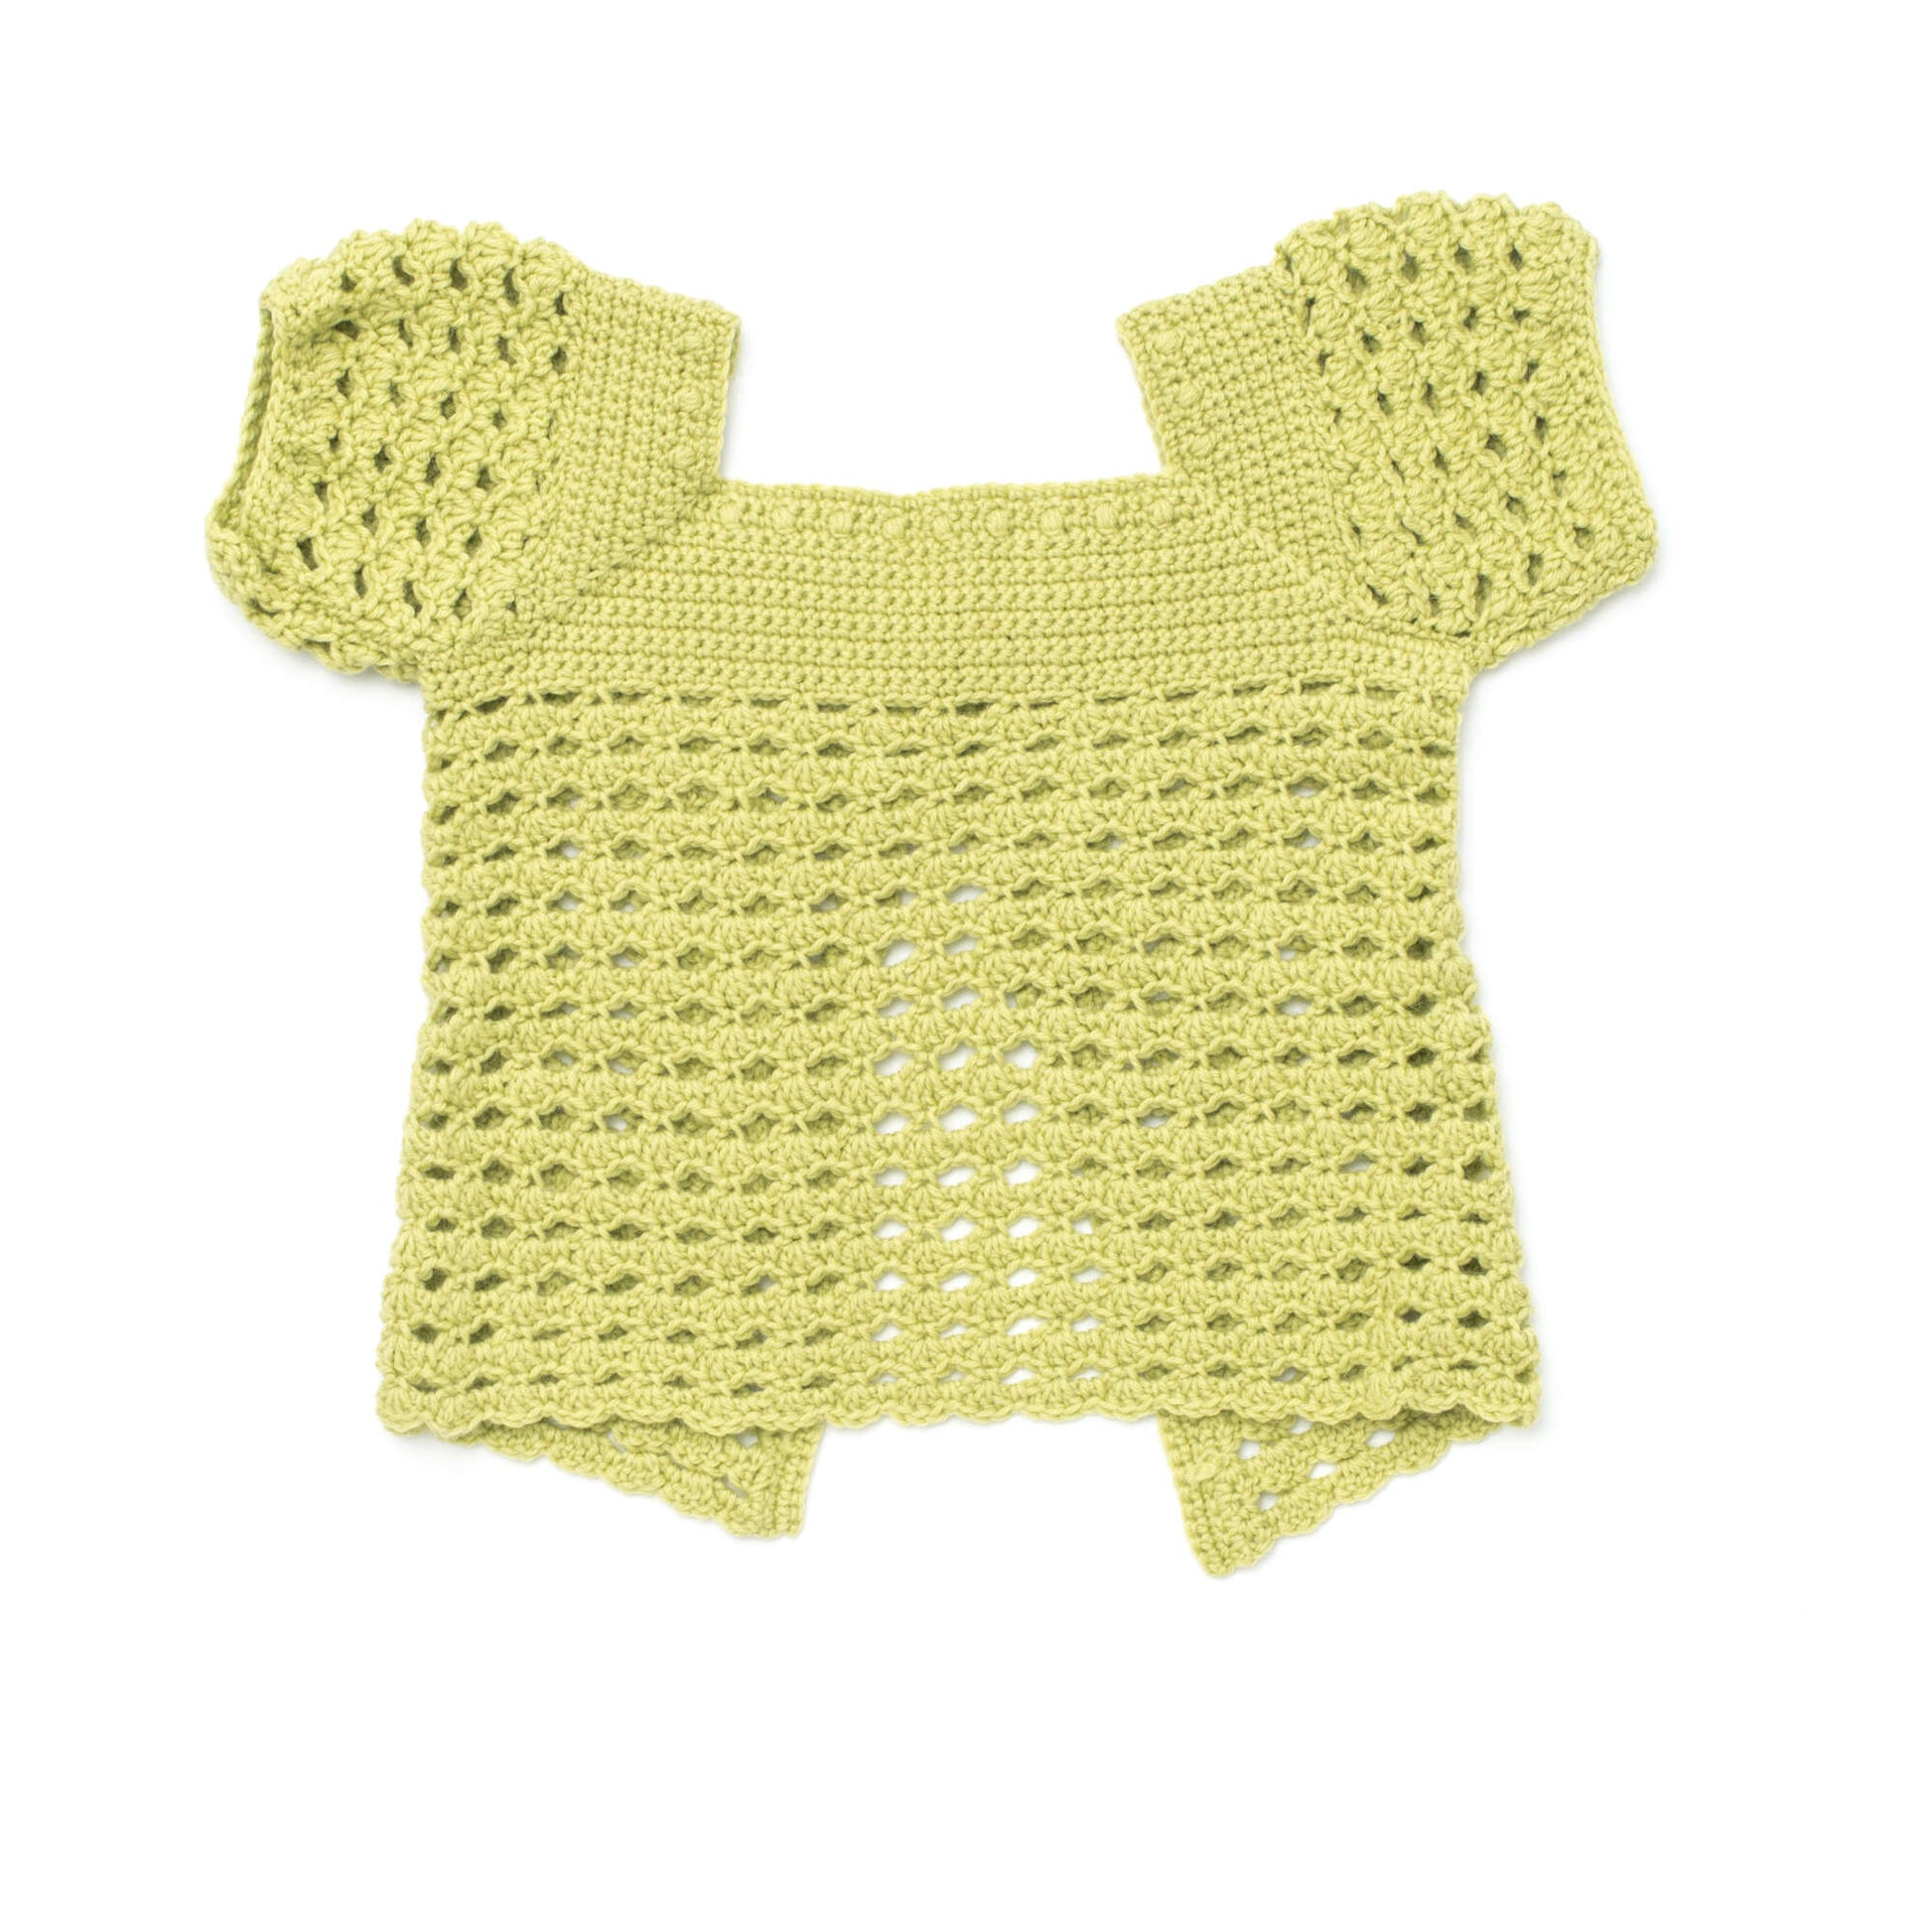 Free Patons Girl's Playground Crochet Cardigan Pattern